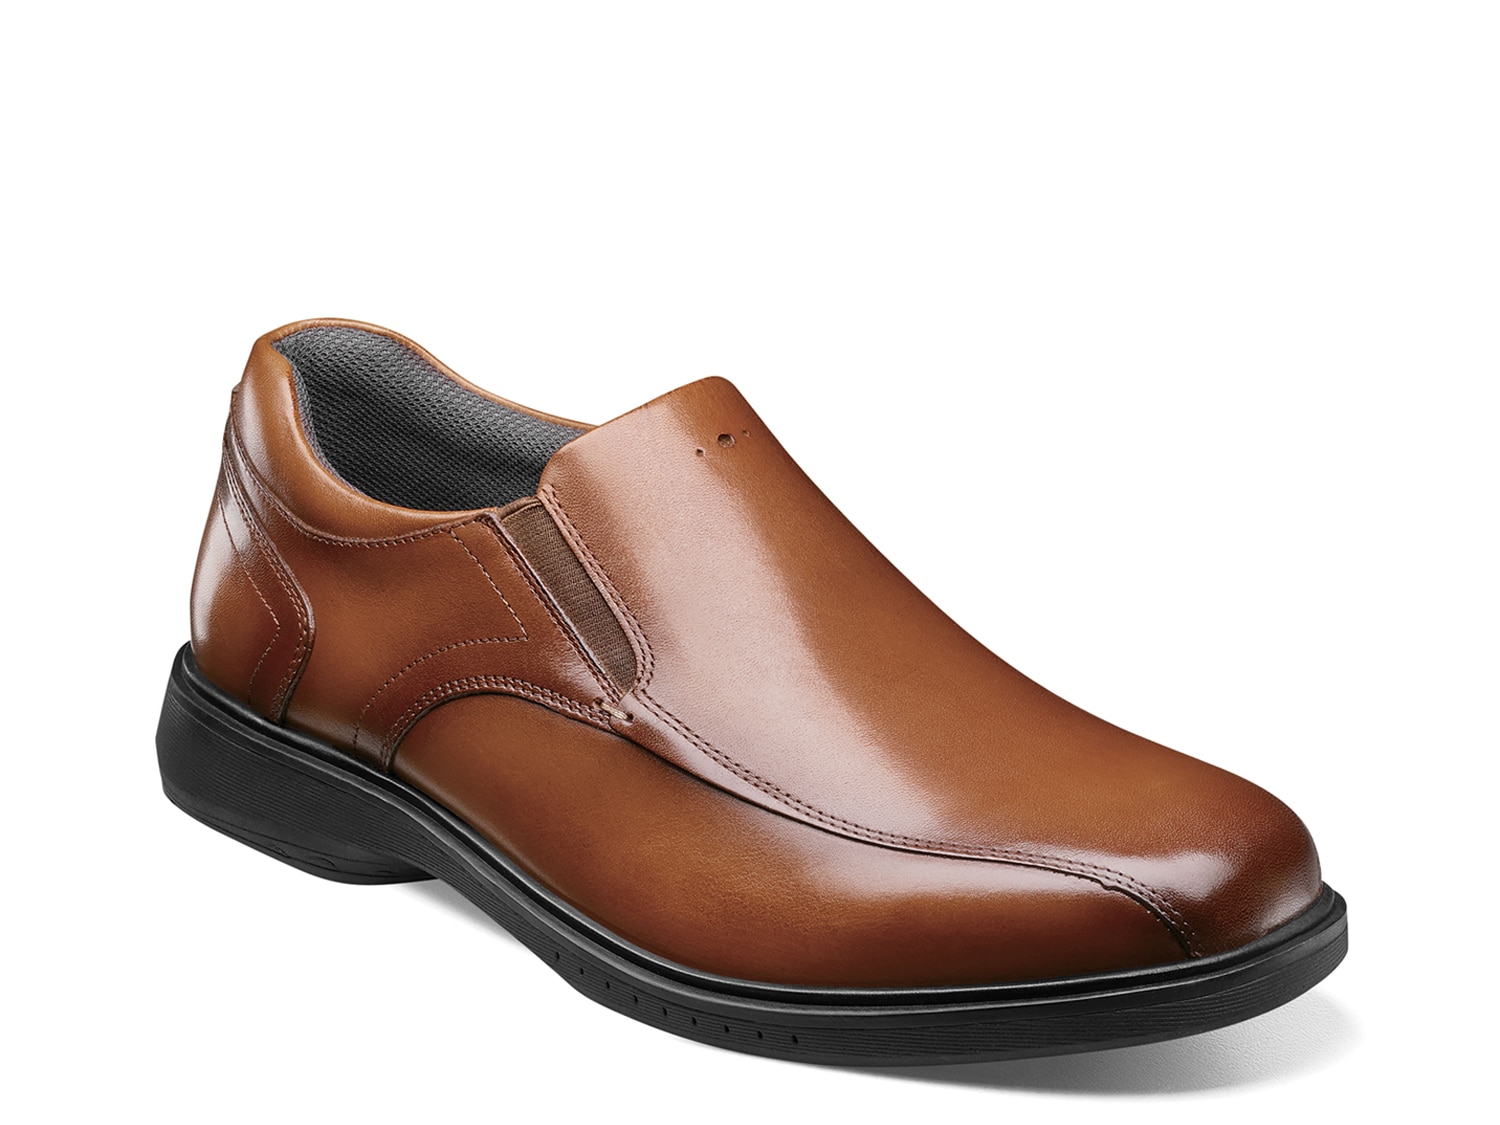 slip resistant brown shoes